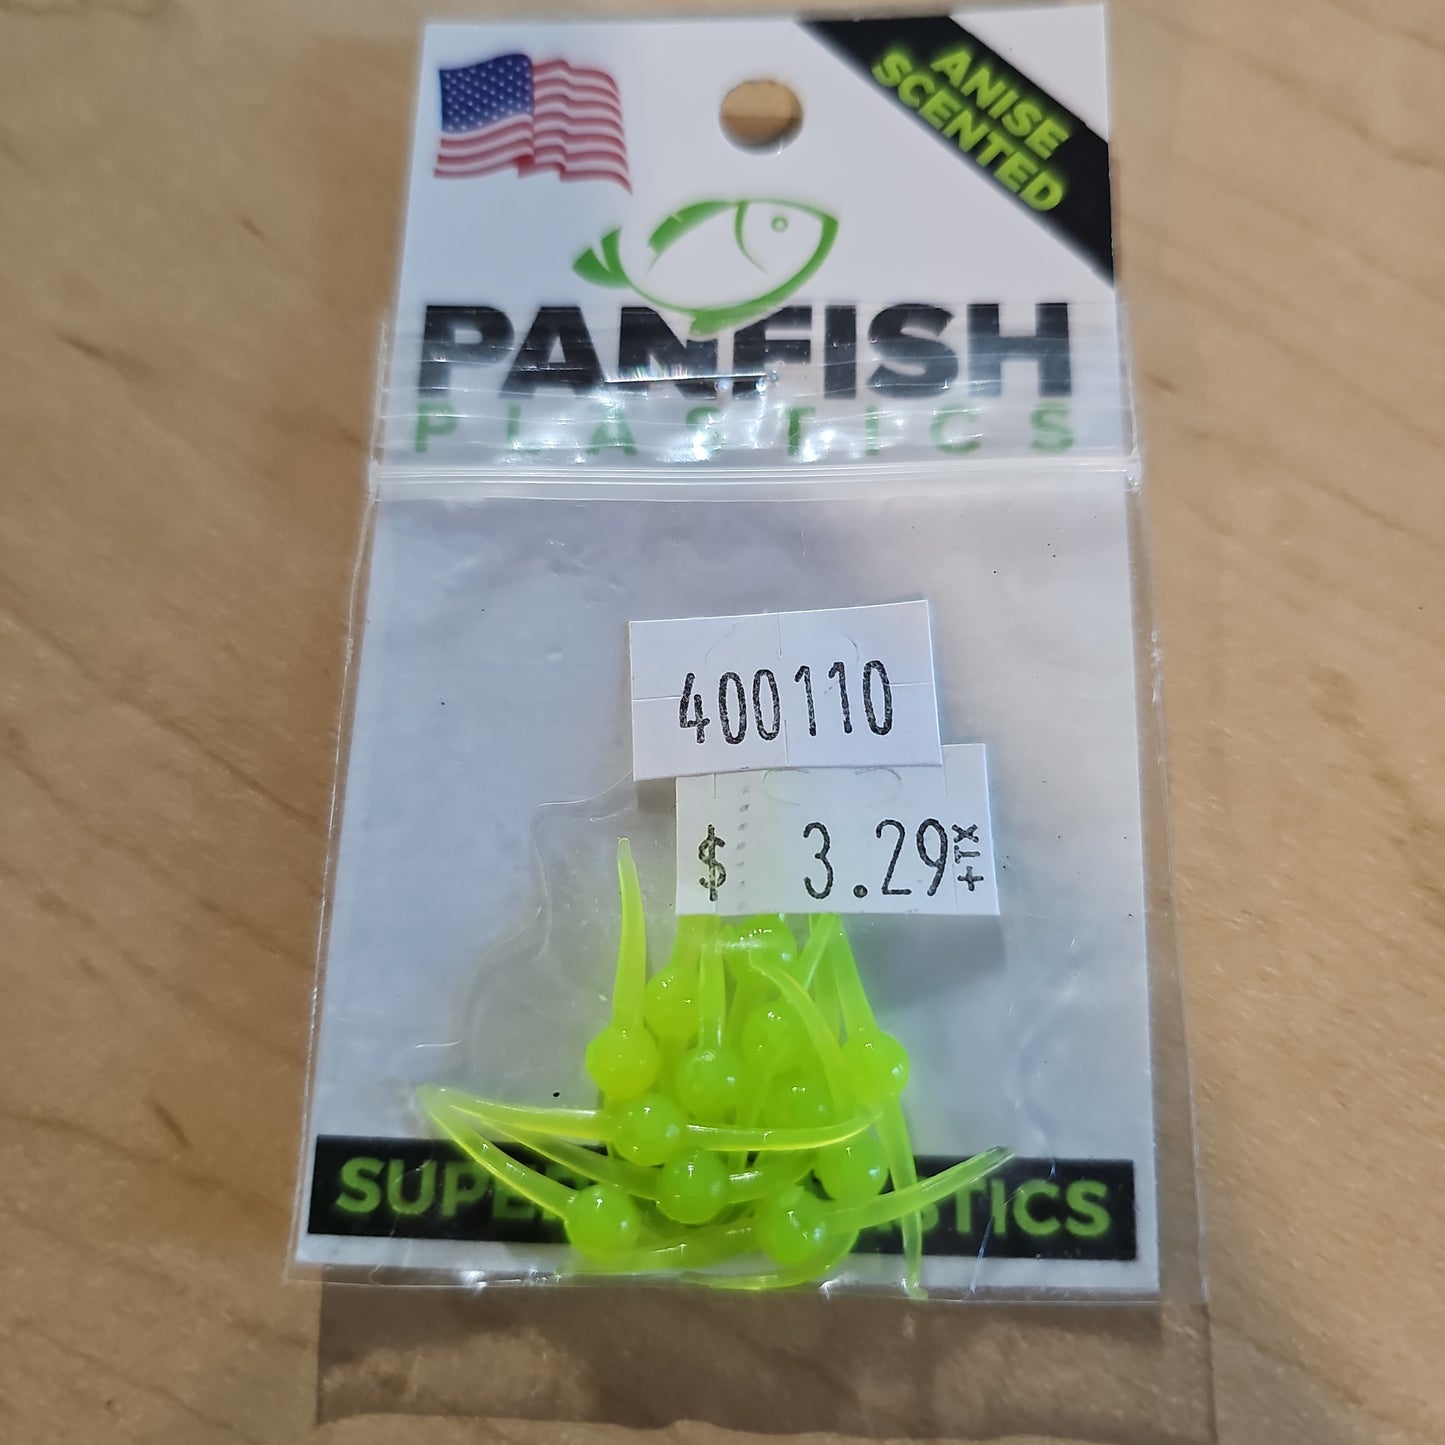 Panfish Plastics